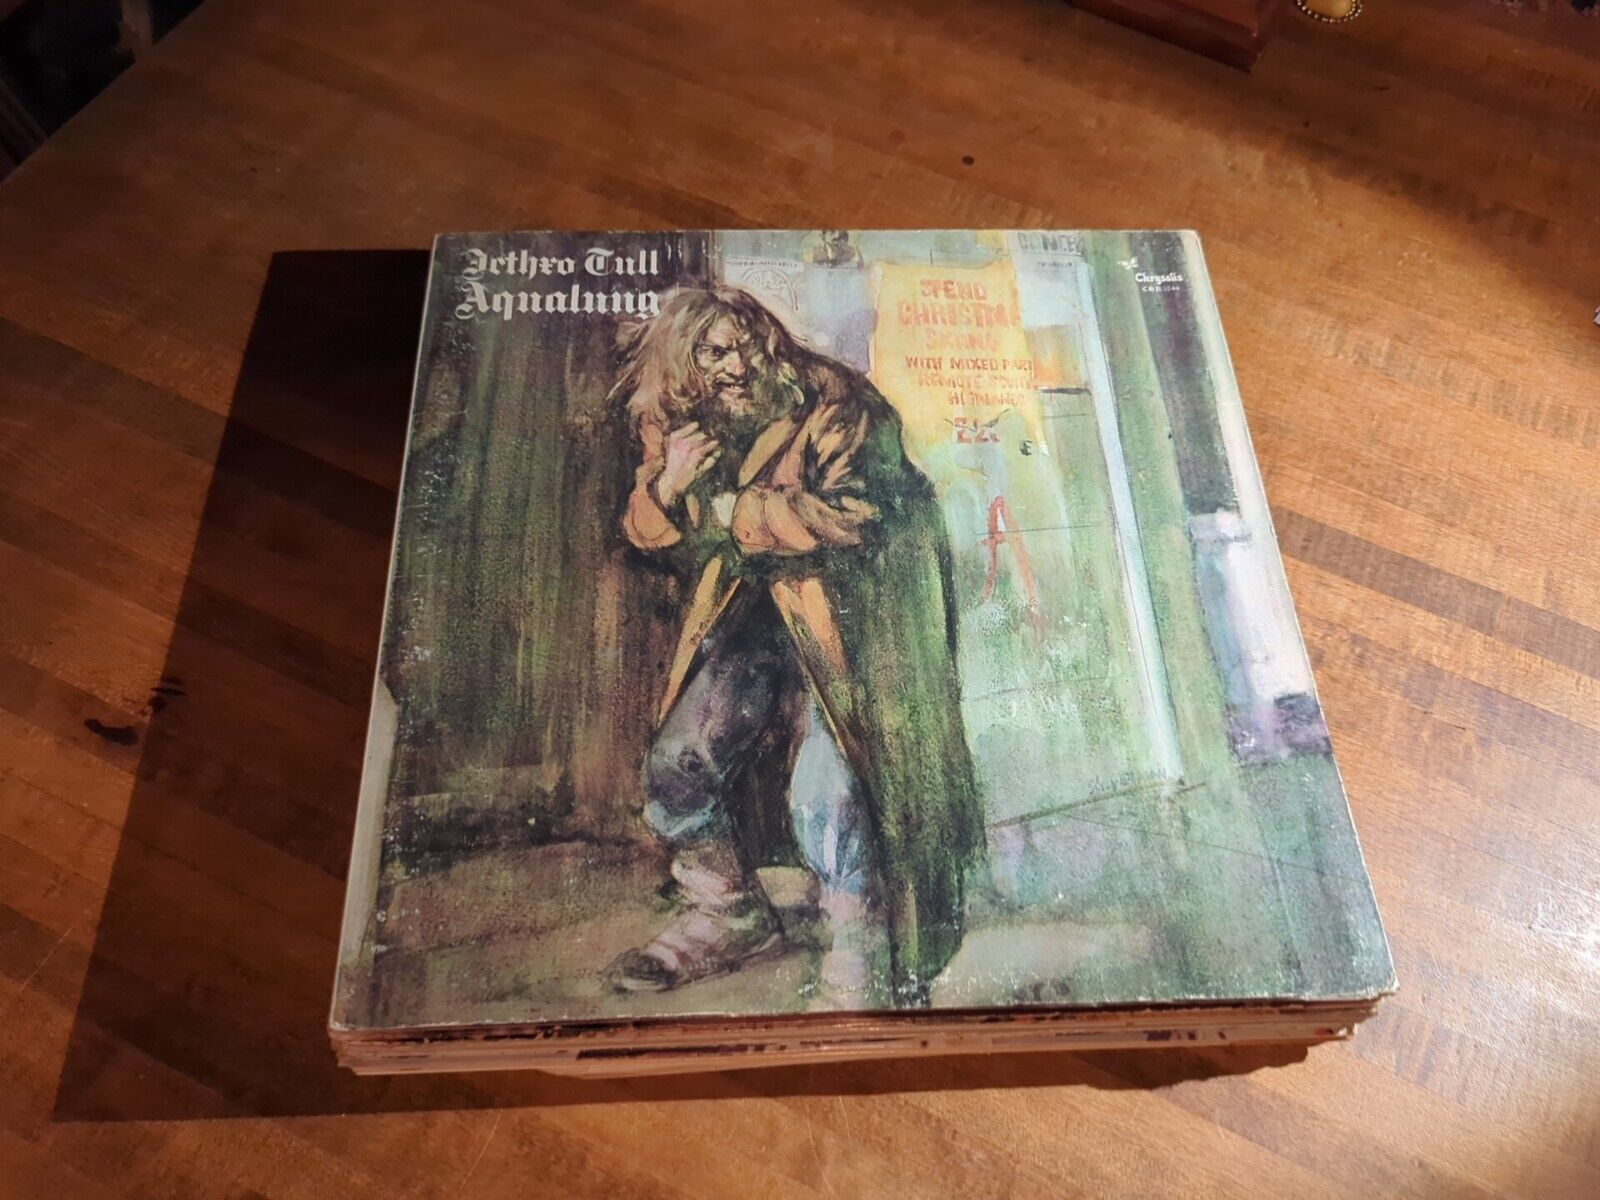 Jethro Tull – Aqualung Vinyl Record LP Album early 70s pressing CHR 1044